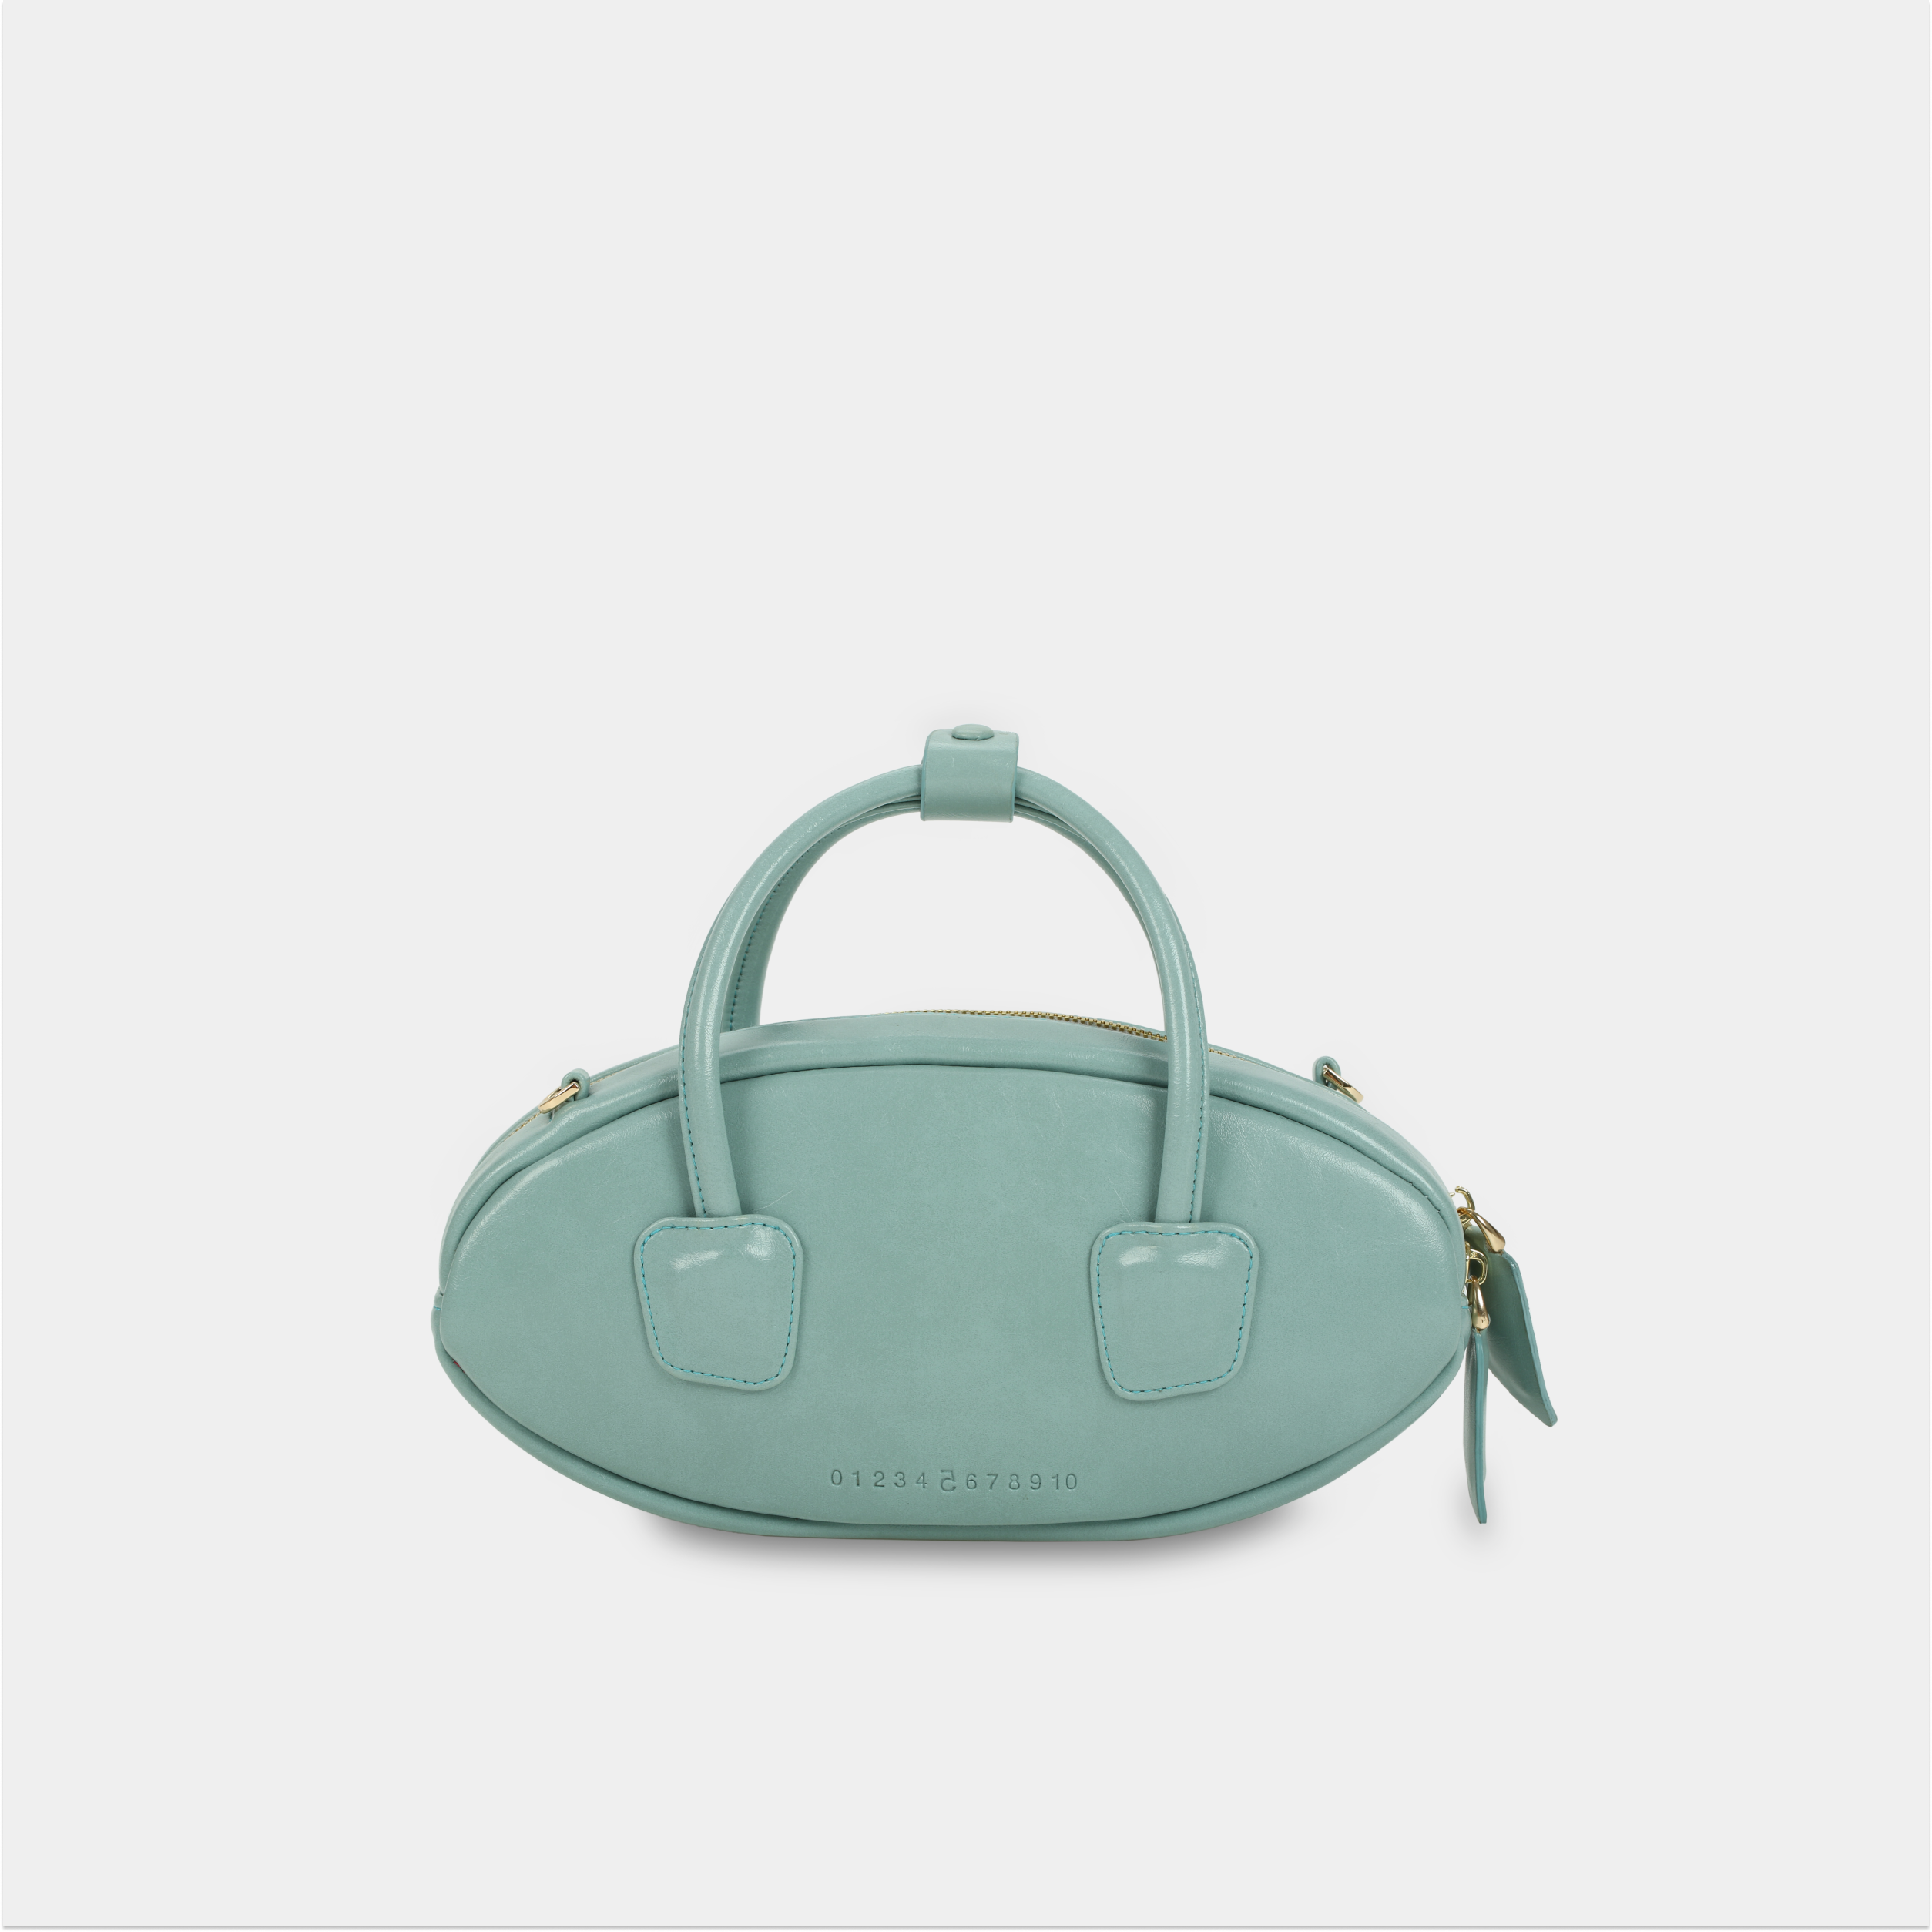 EGG handbag in pastel turquoise